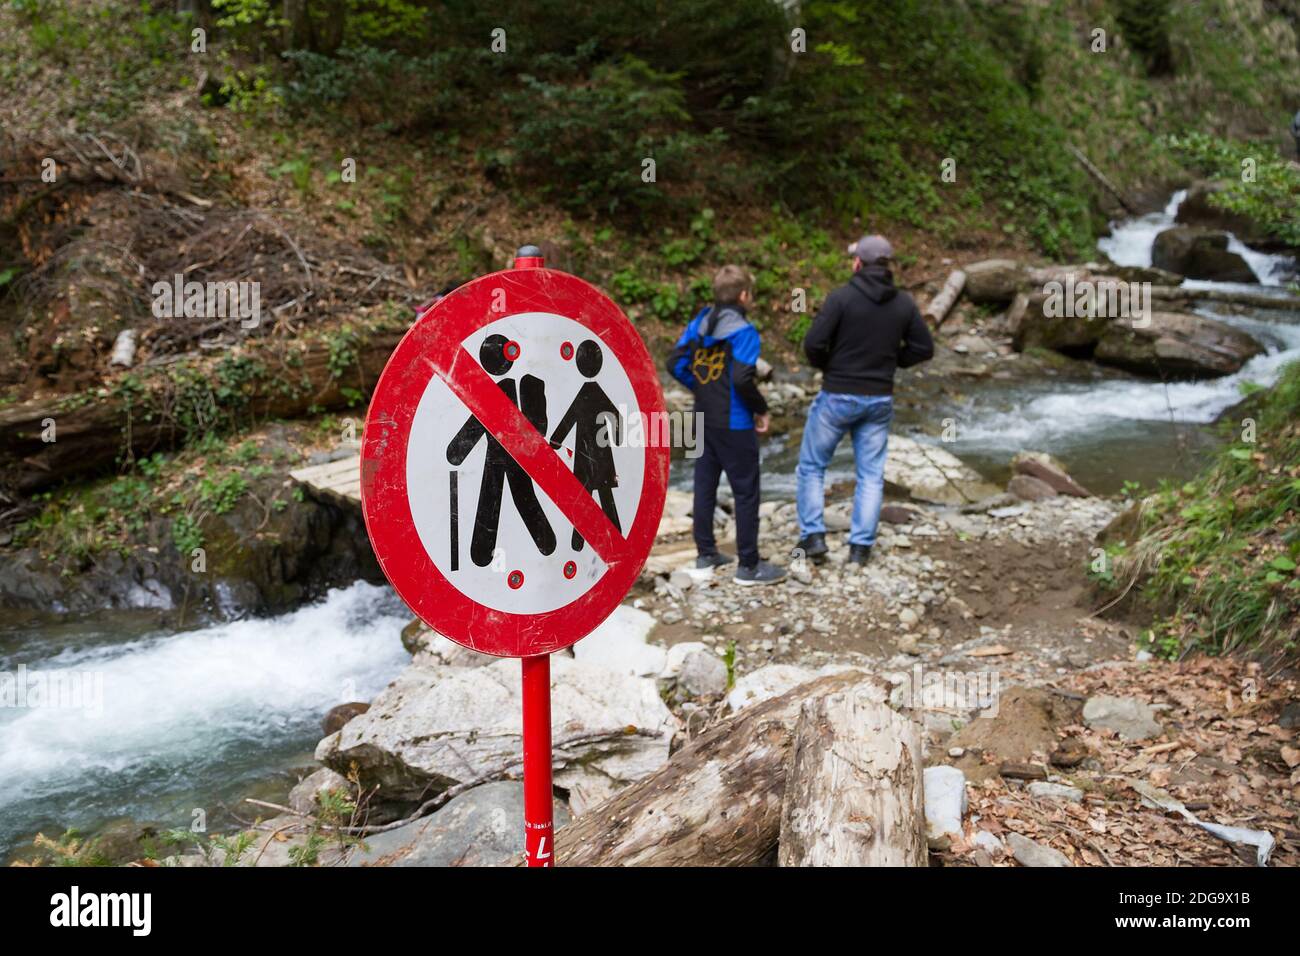 Russia. Krasnodar region. Walk denial sign in the mountains. Stock Photo